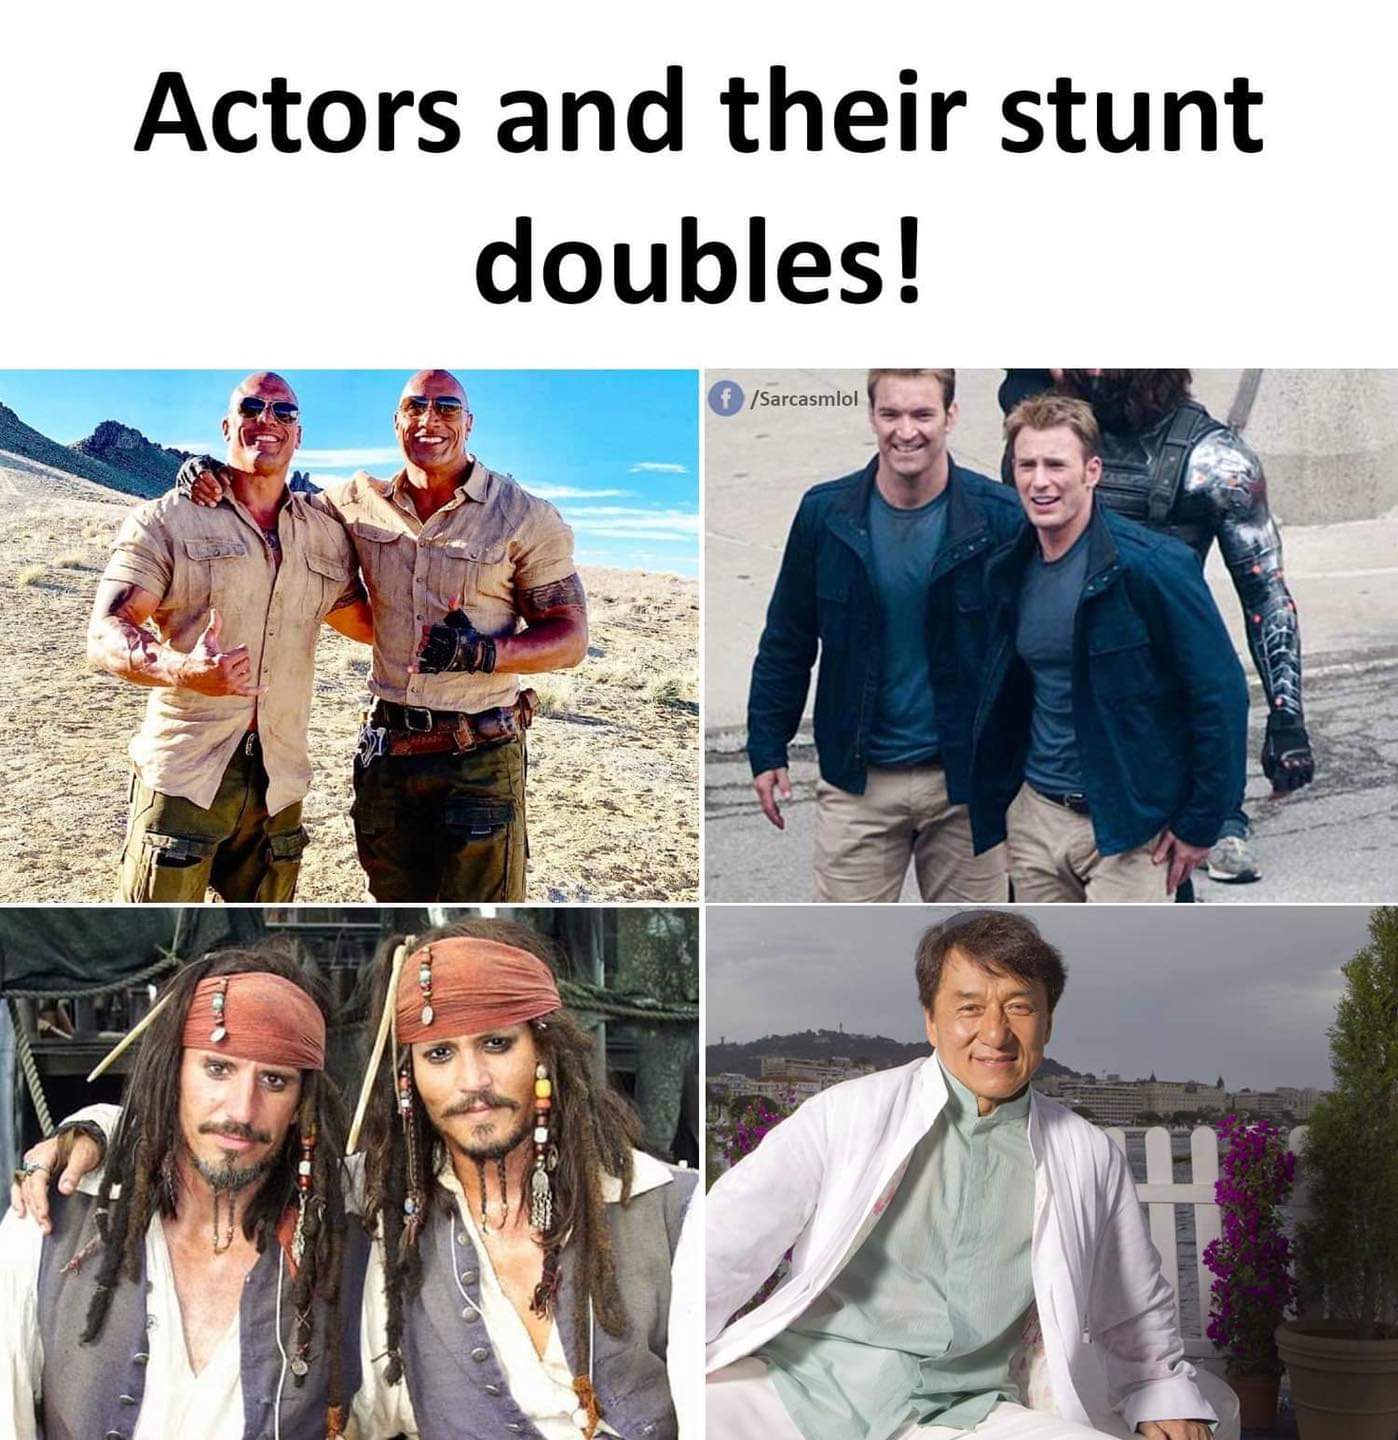 funny random photos - friendship - Actors and their stunt doubles! f Sarcasmlol